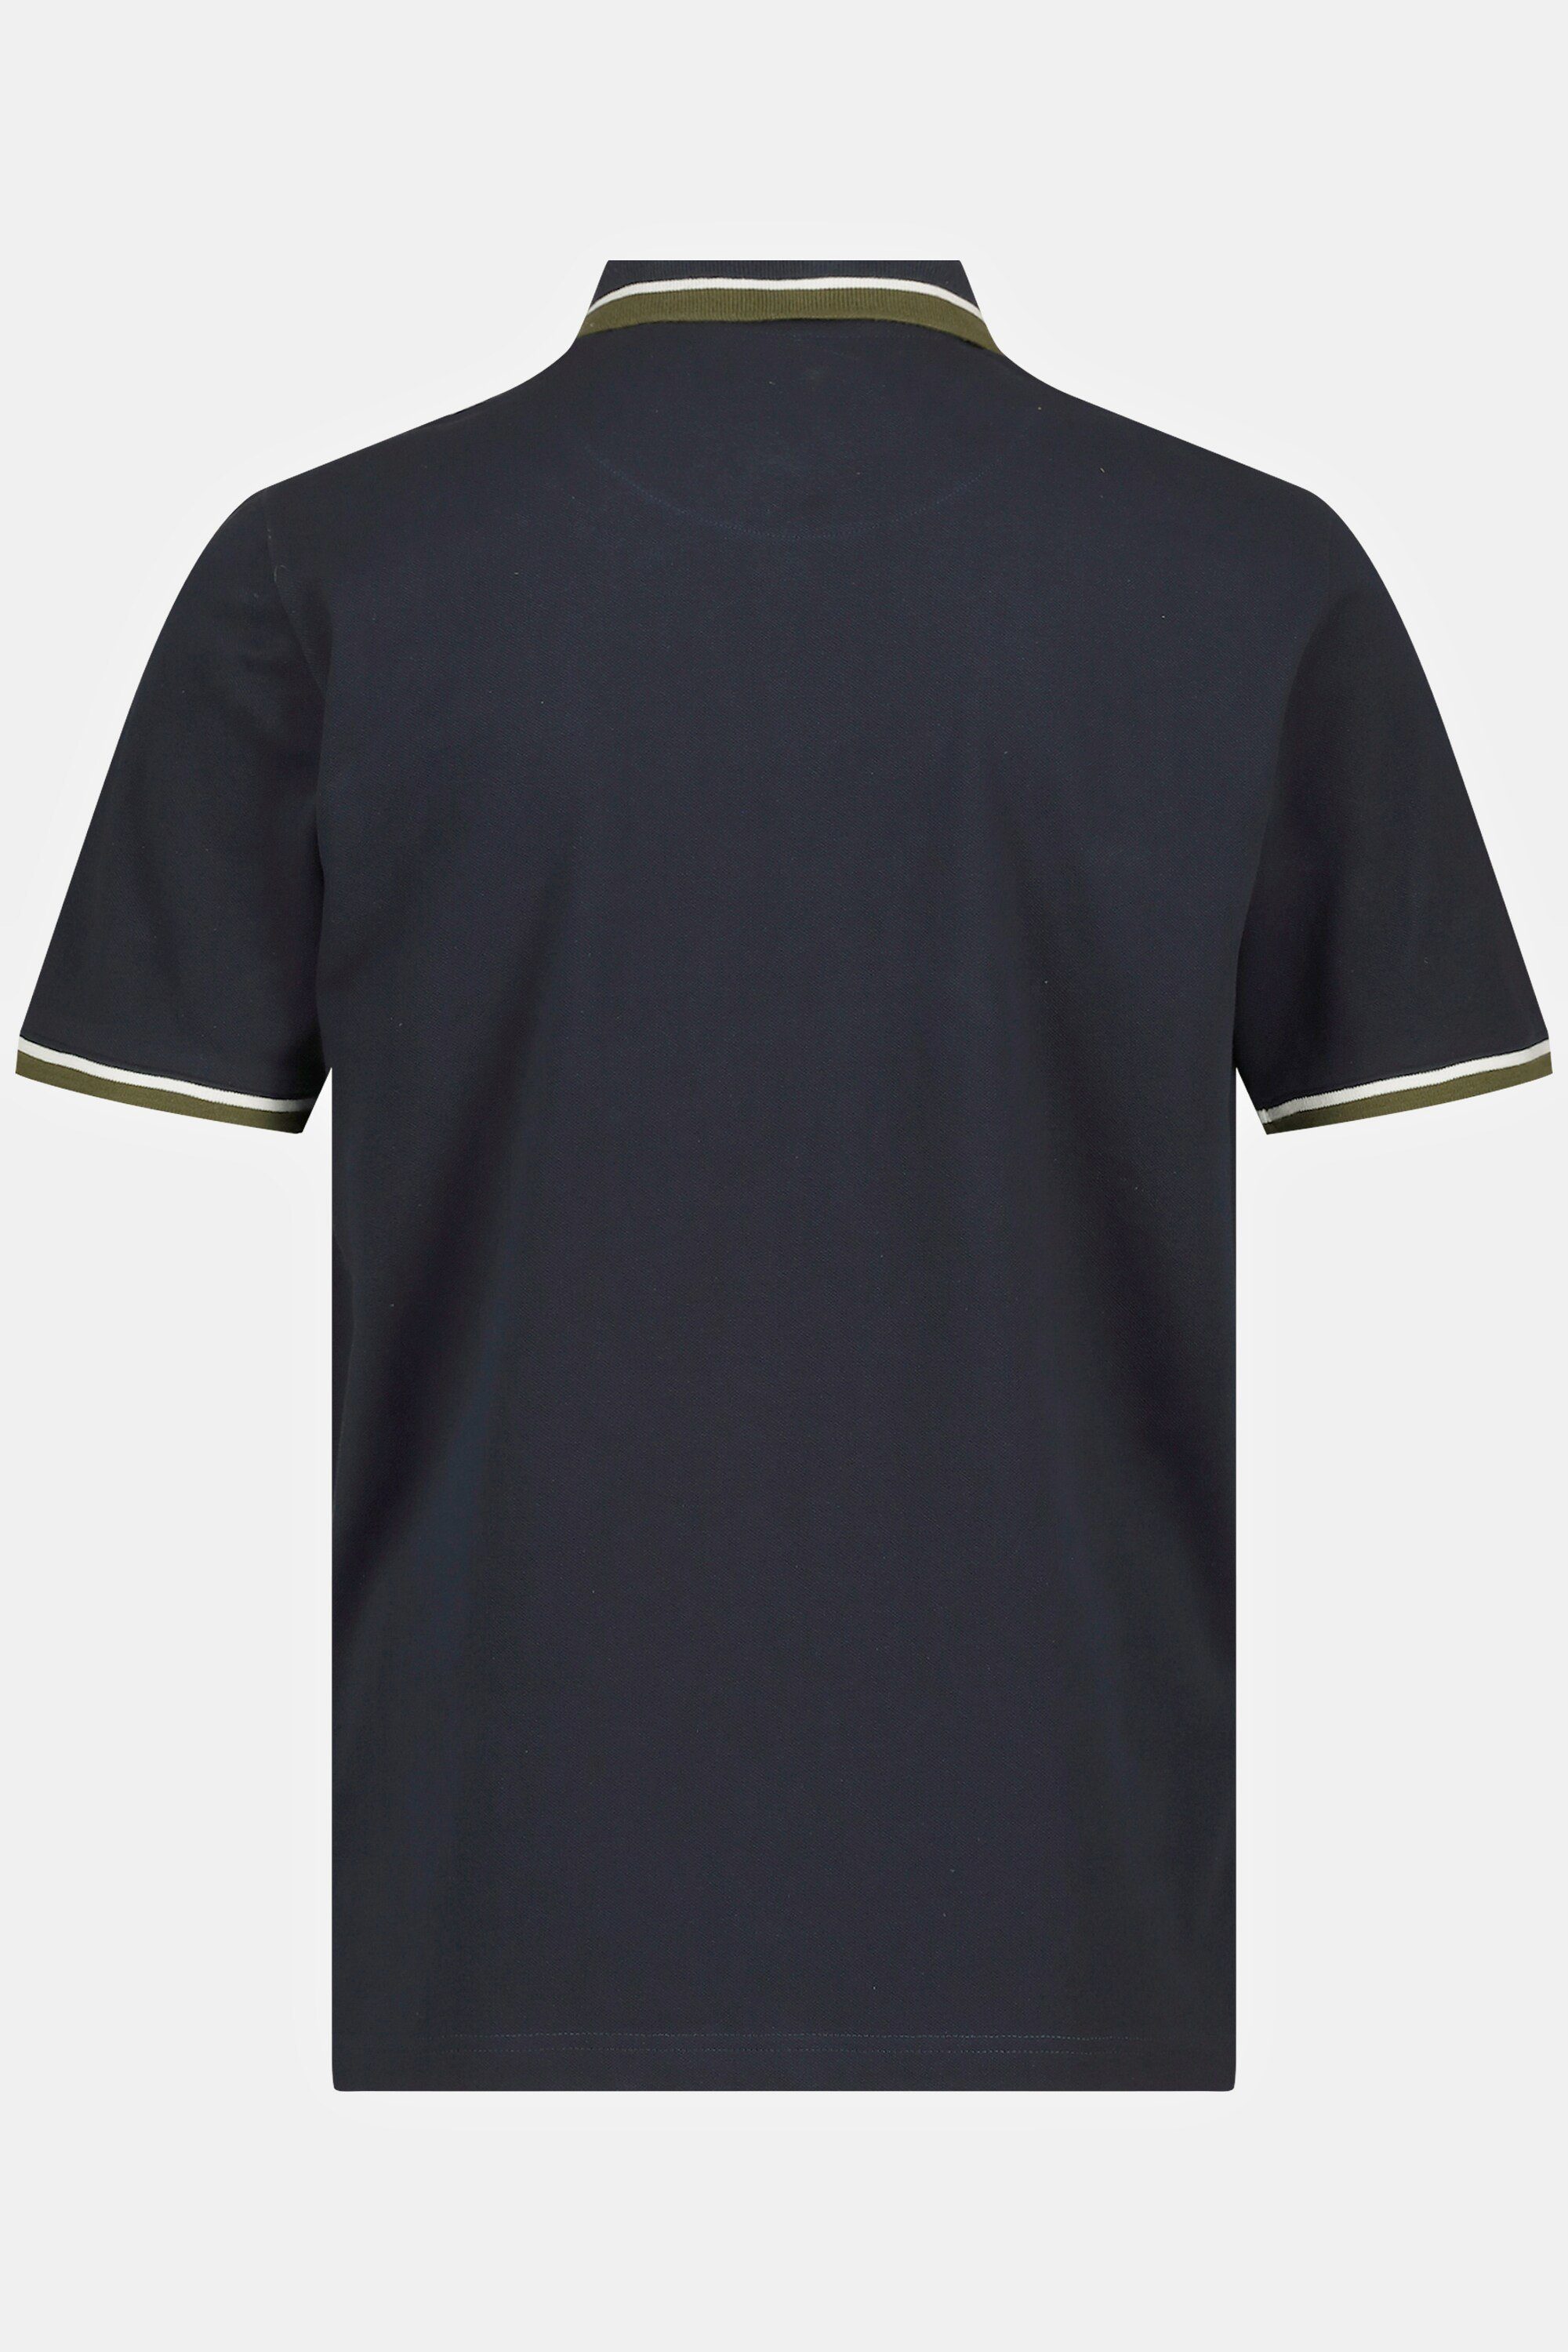 STHUGE Kontrast-Polokragen Halbarm Piqué Poloshirt STHUGE Poloshirt